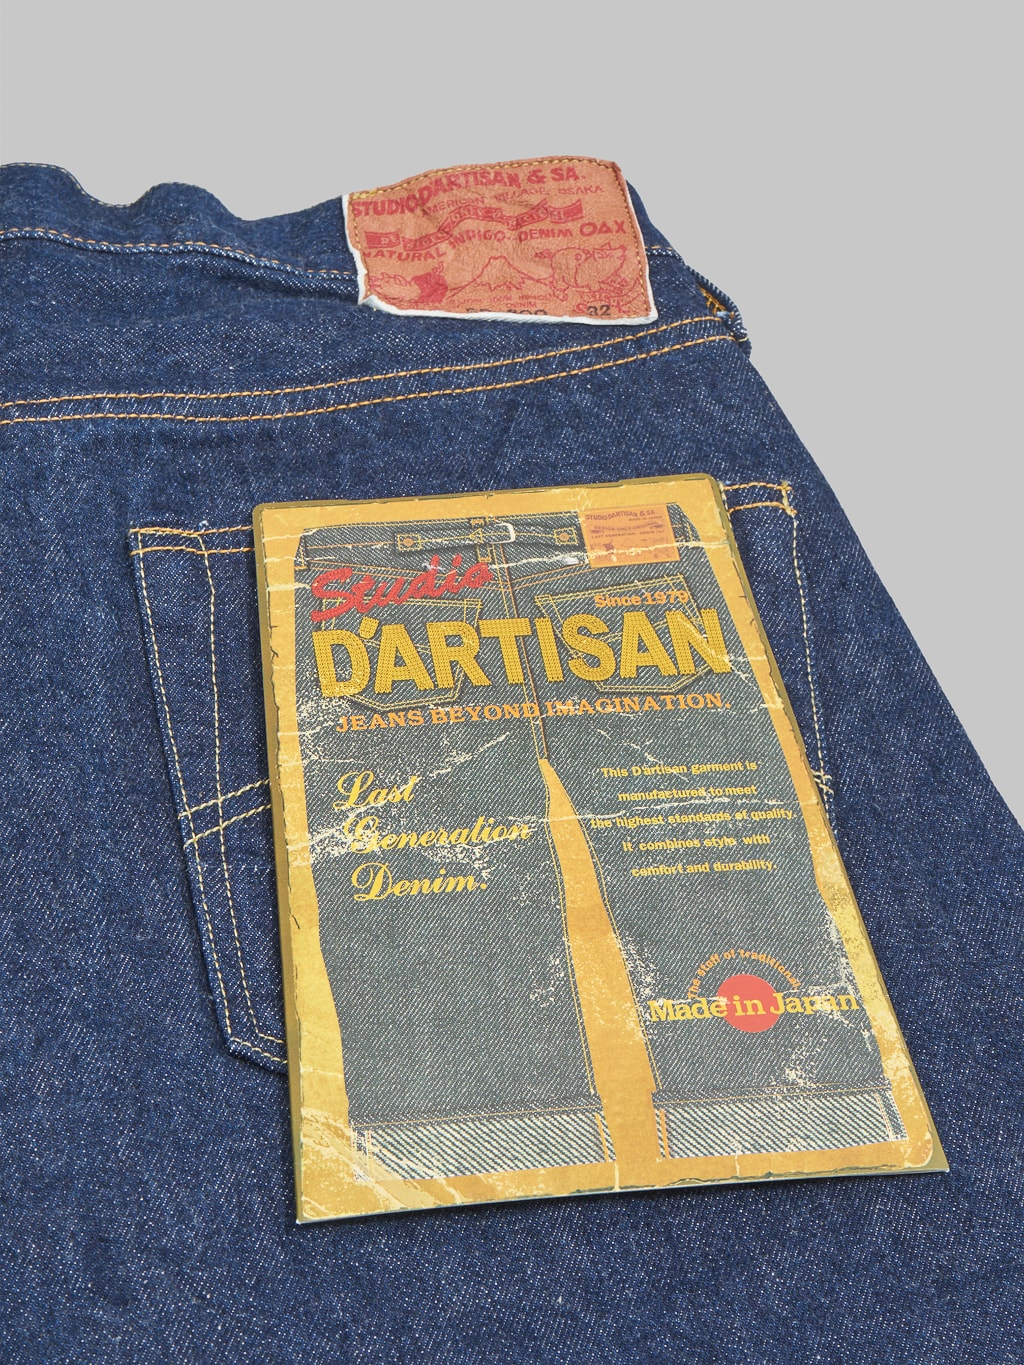 Studio D'Artisan natural indigo jeans pocket detail